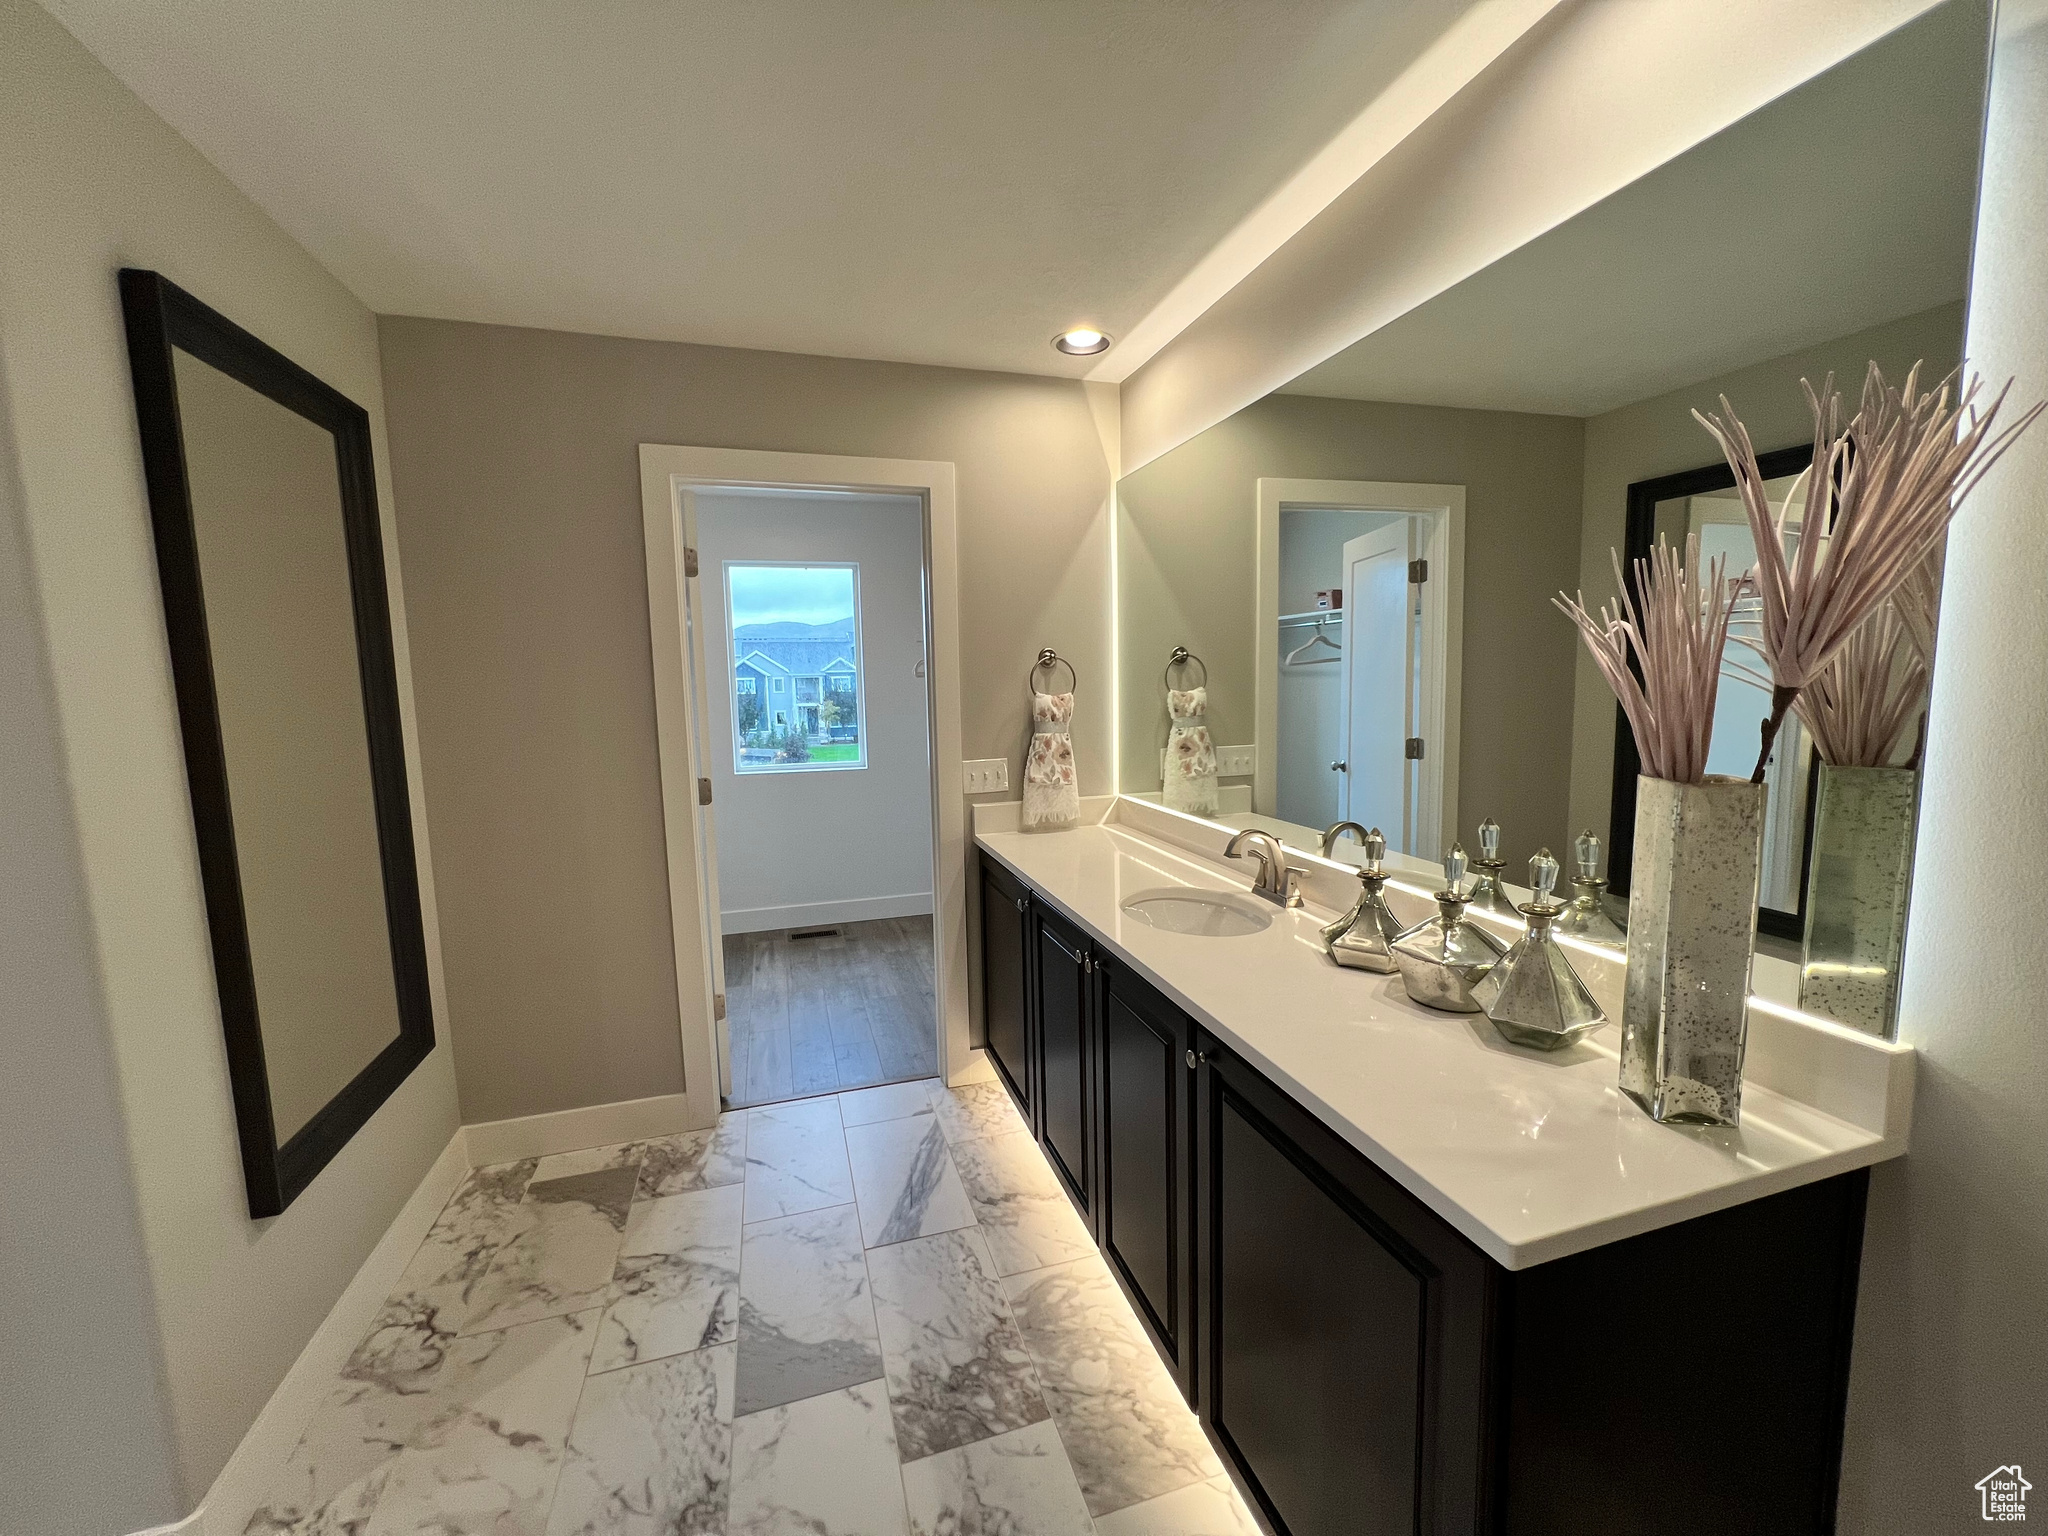 Bathroom with tile floors and oversized vanity